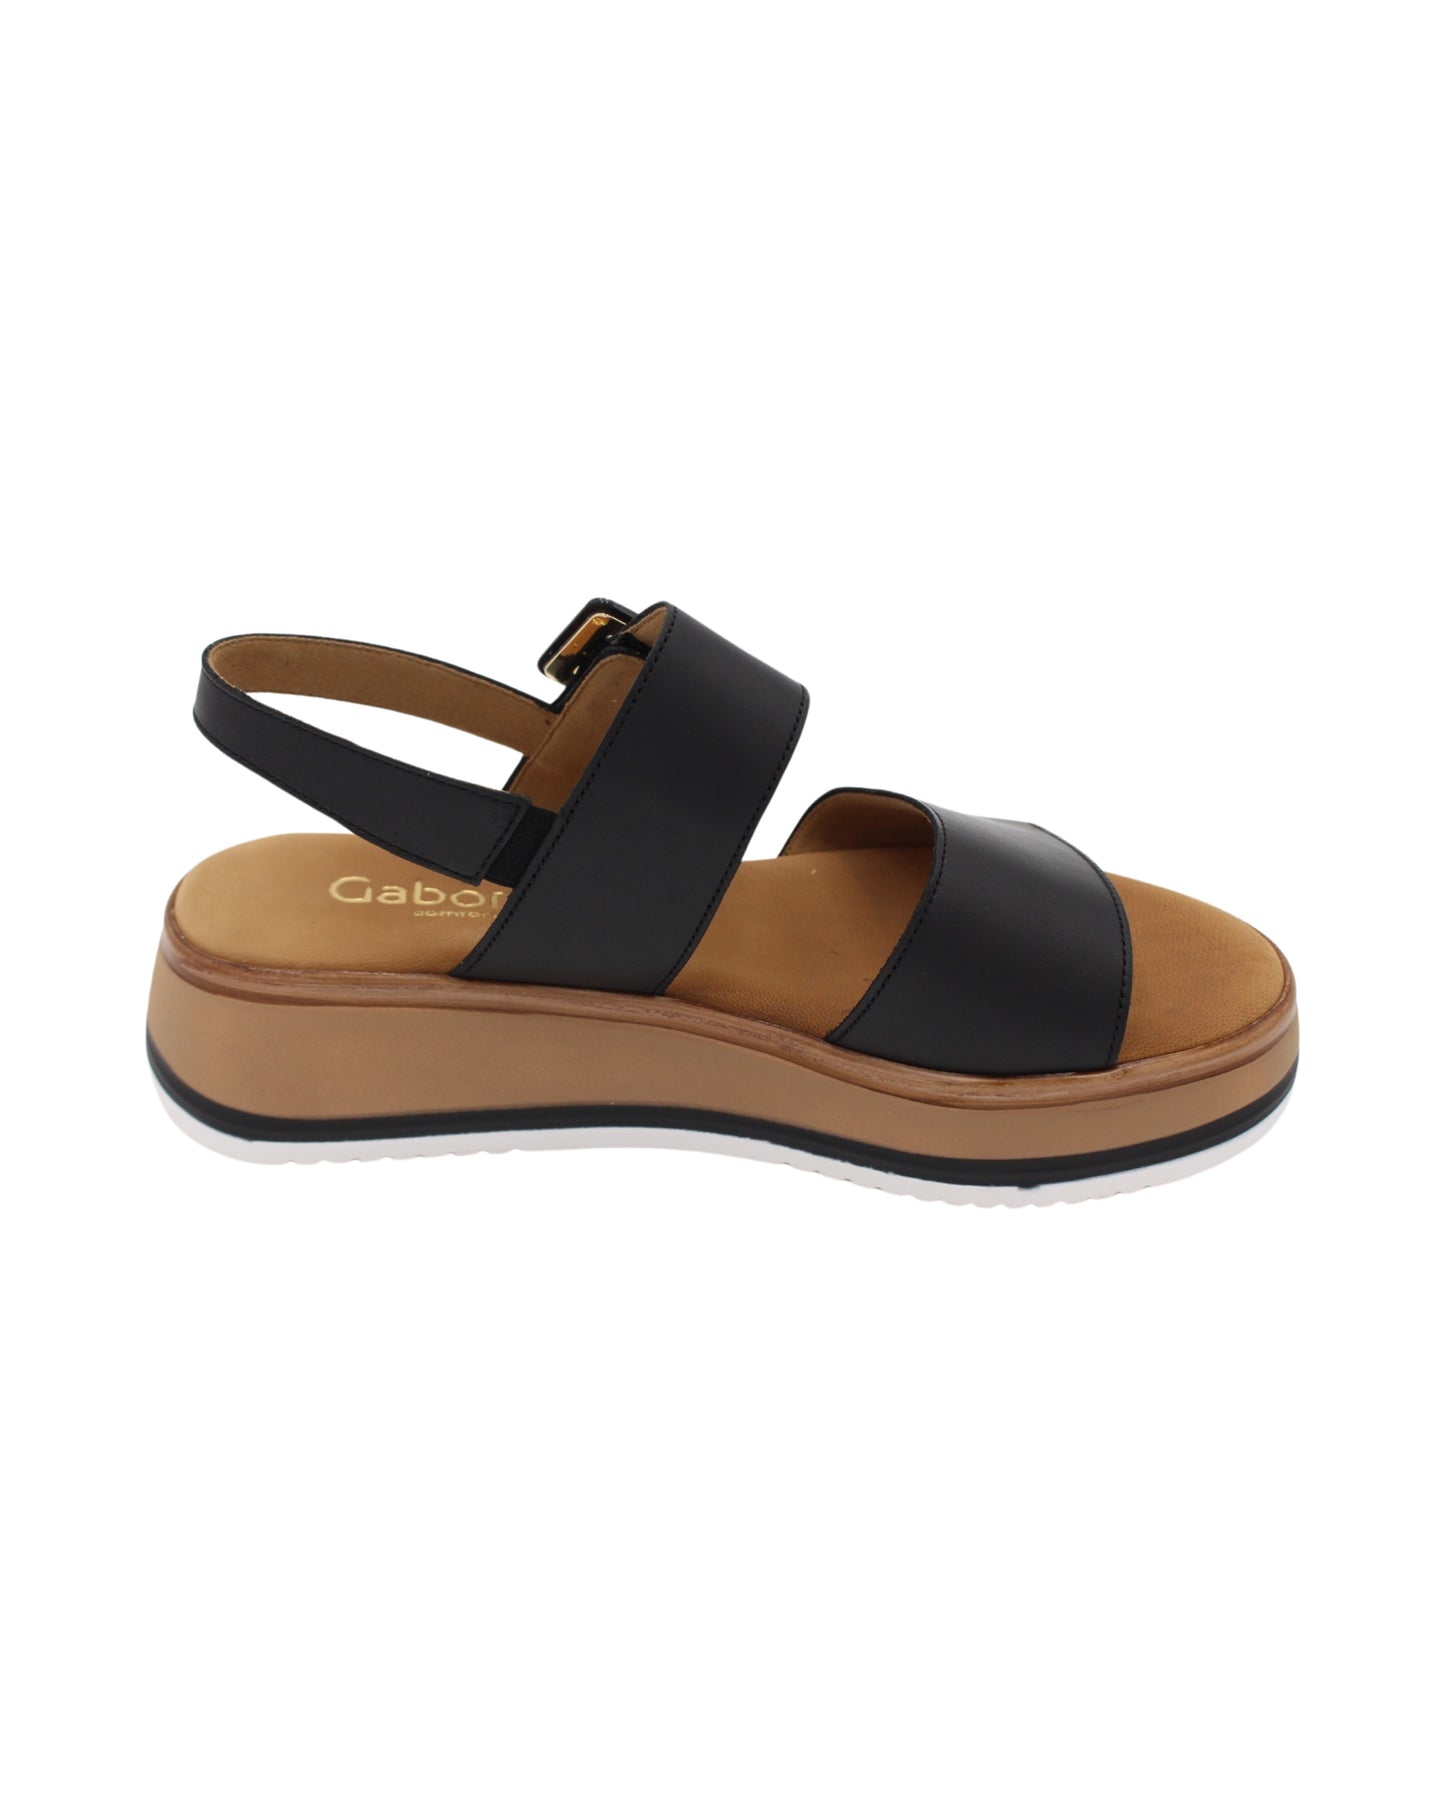 Gabor - Ladies Shoes Sandals Black (2164)